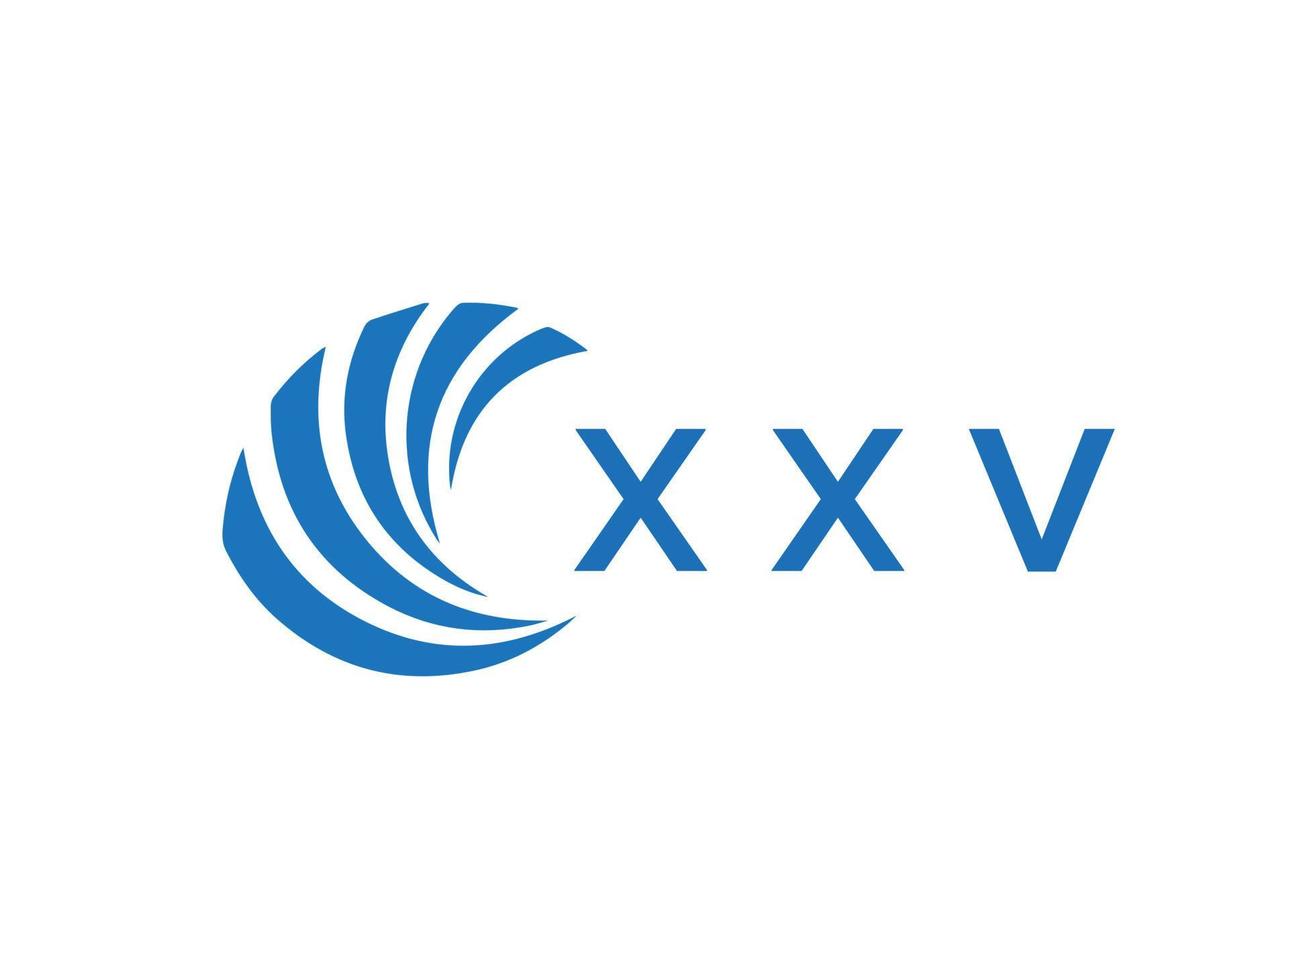 XXV letter logo design on white background. XXV creative circle letter logo concept. XXV letter design. vector